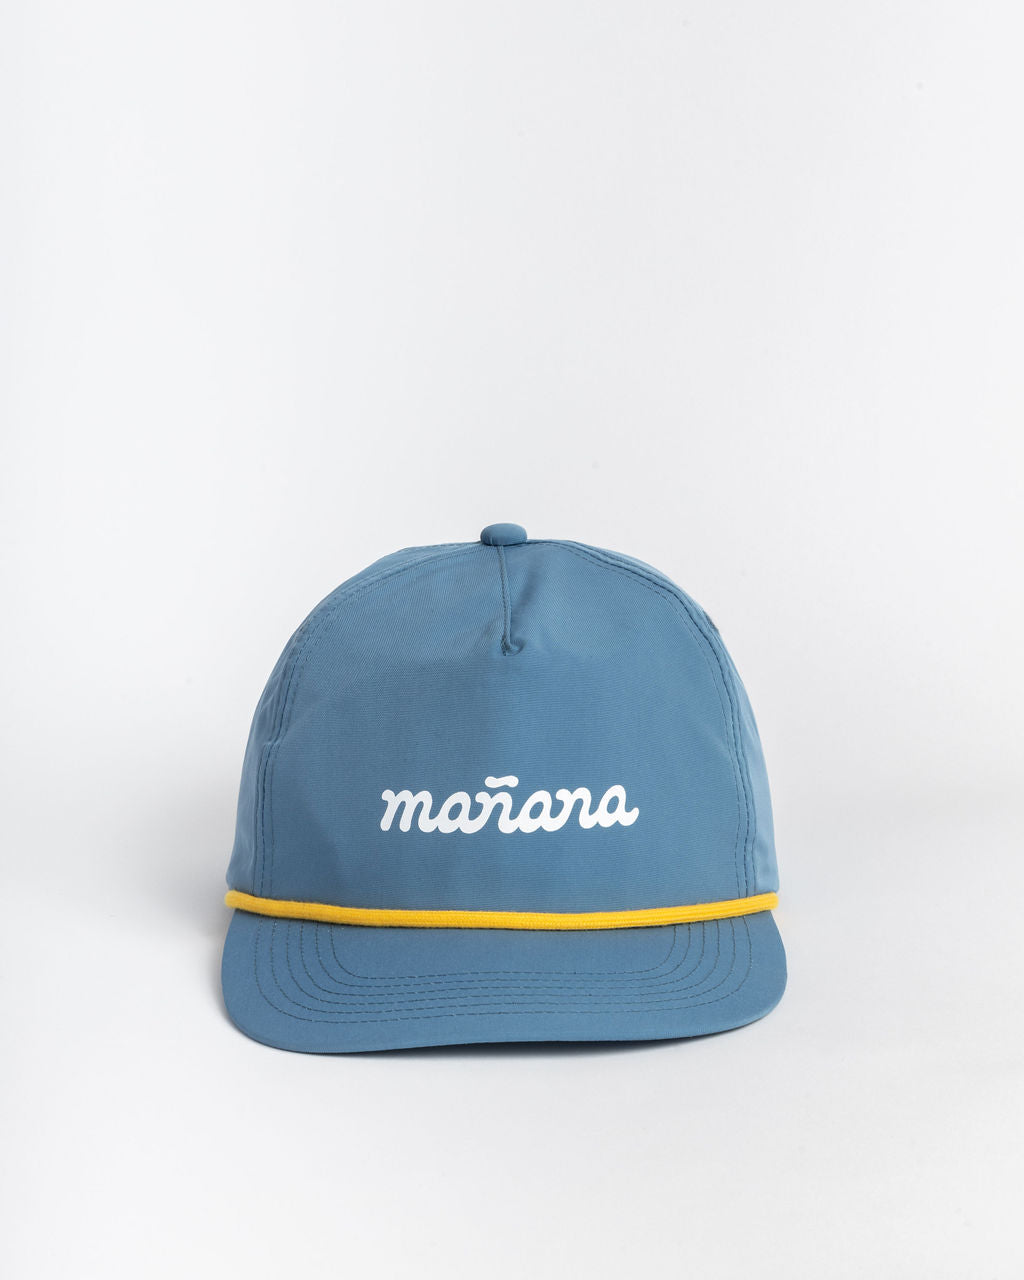 a blue classis cap with Manana branding